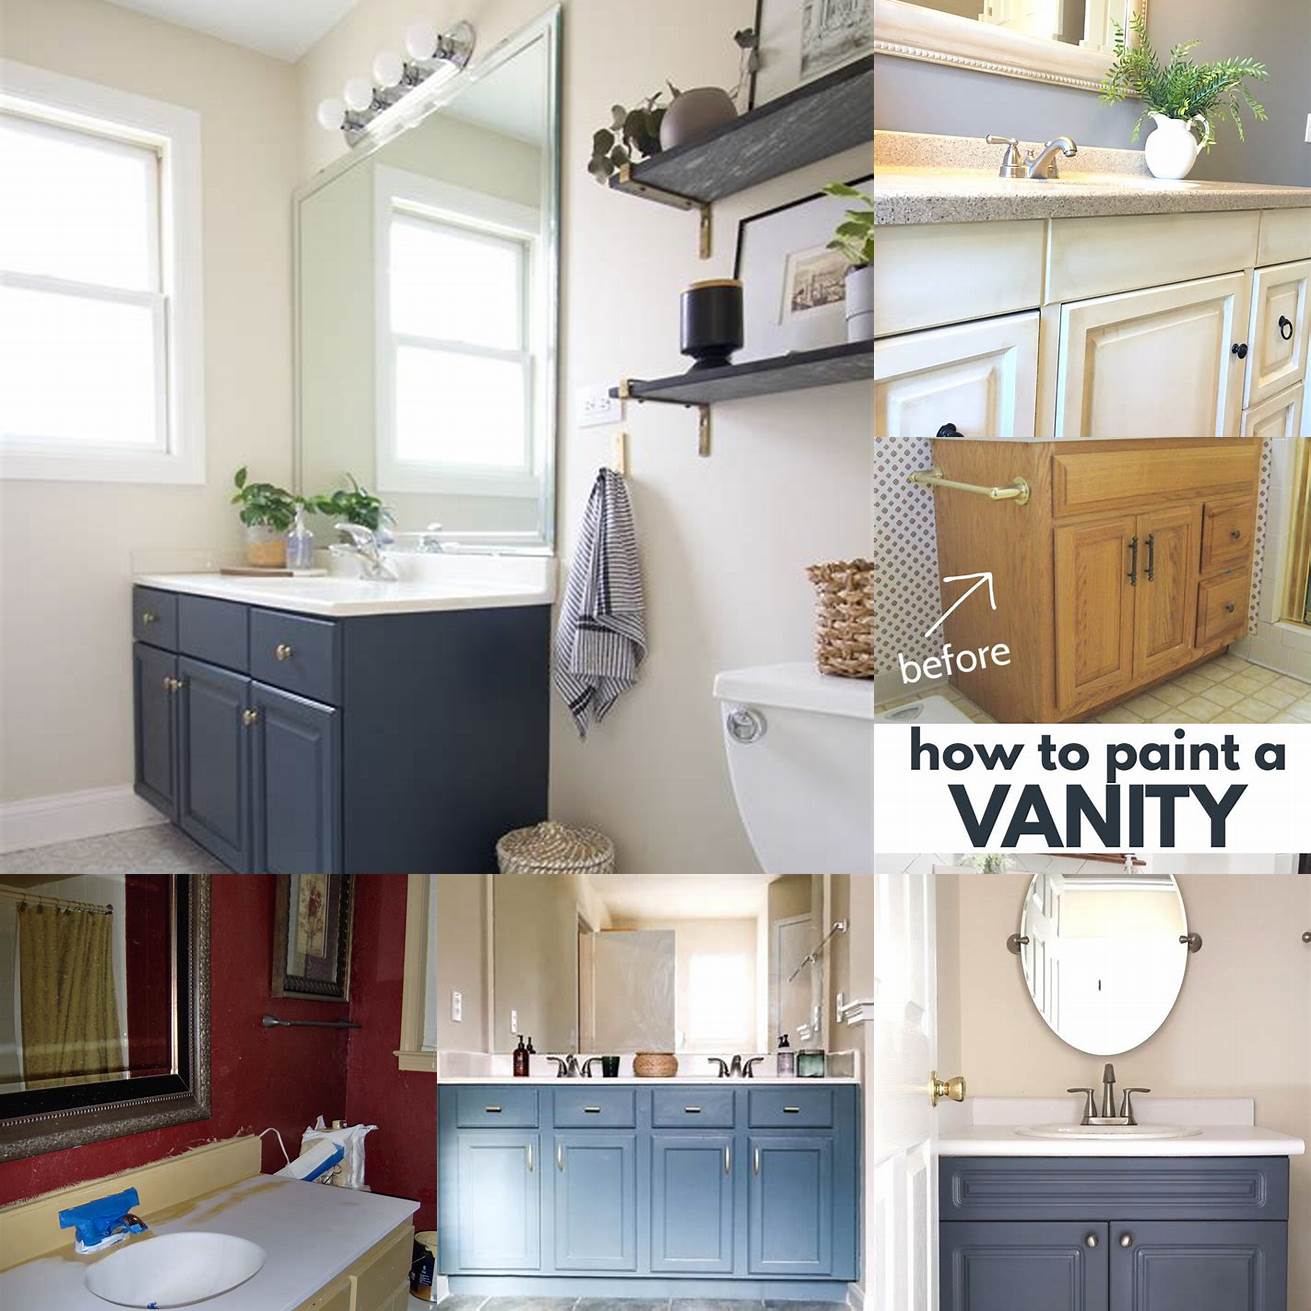 Step-by-step photos of painting a bathroom vanity